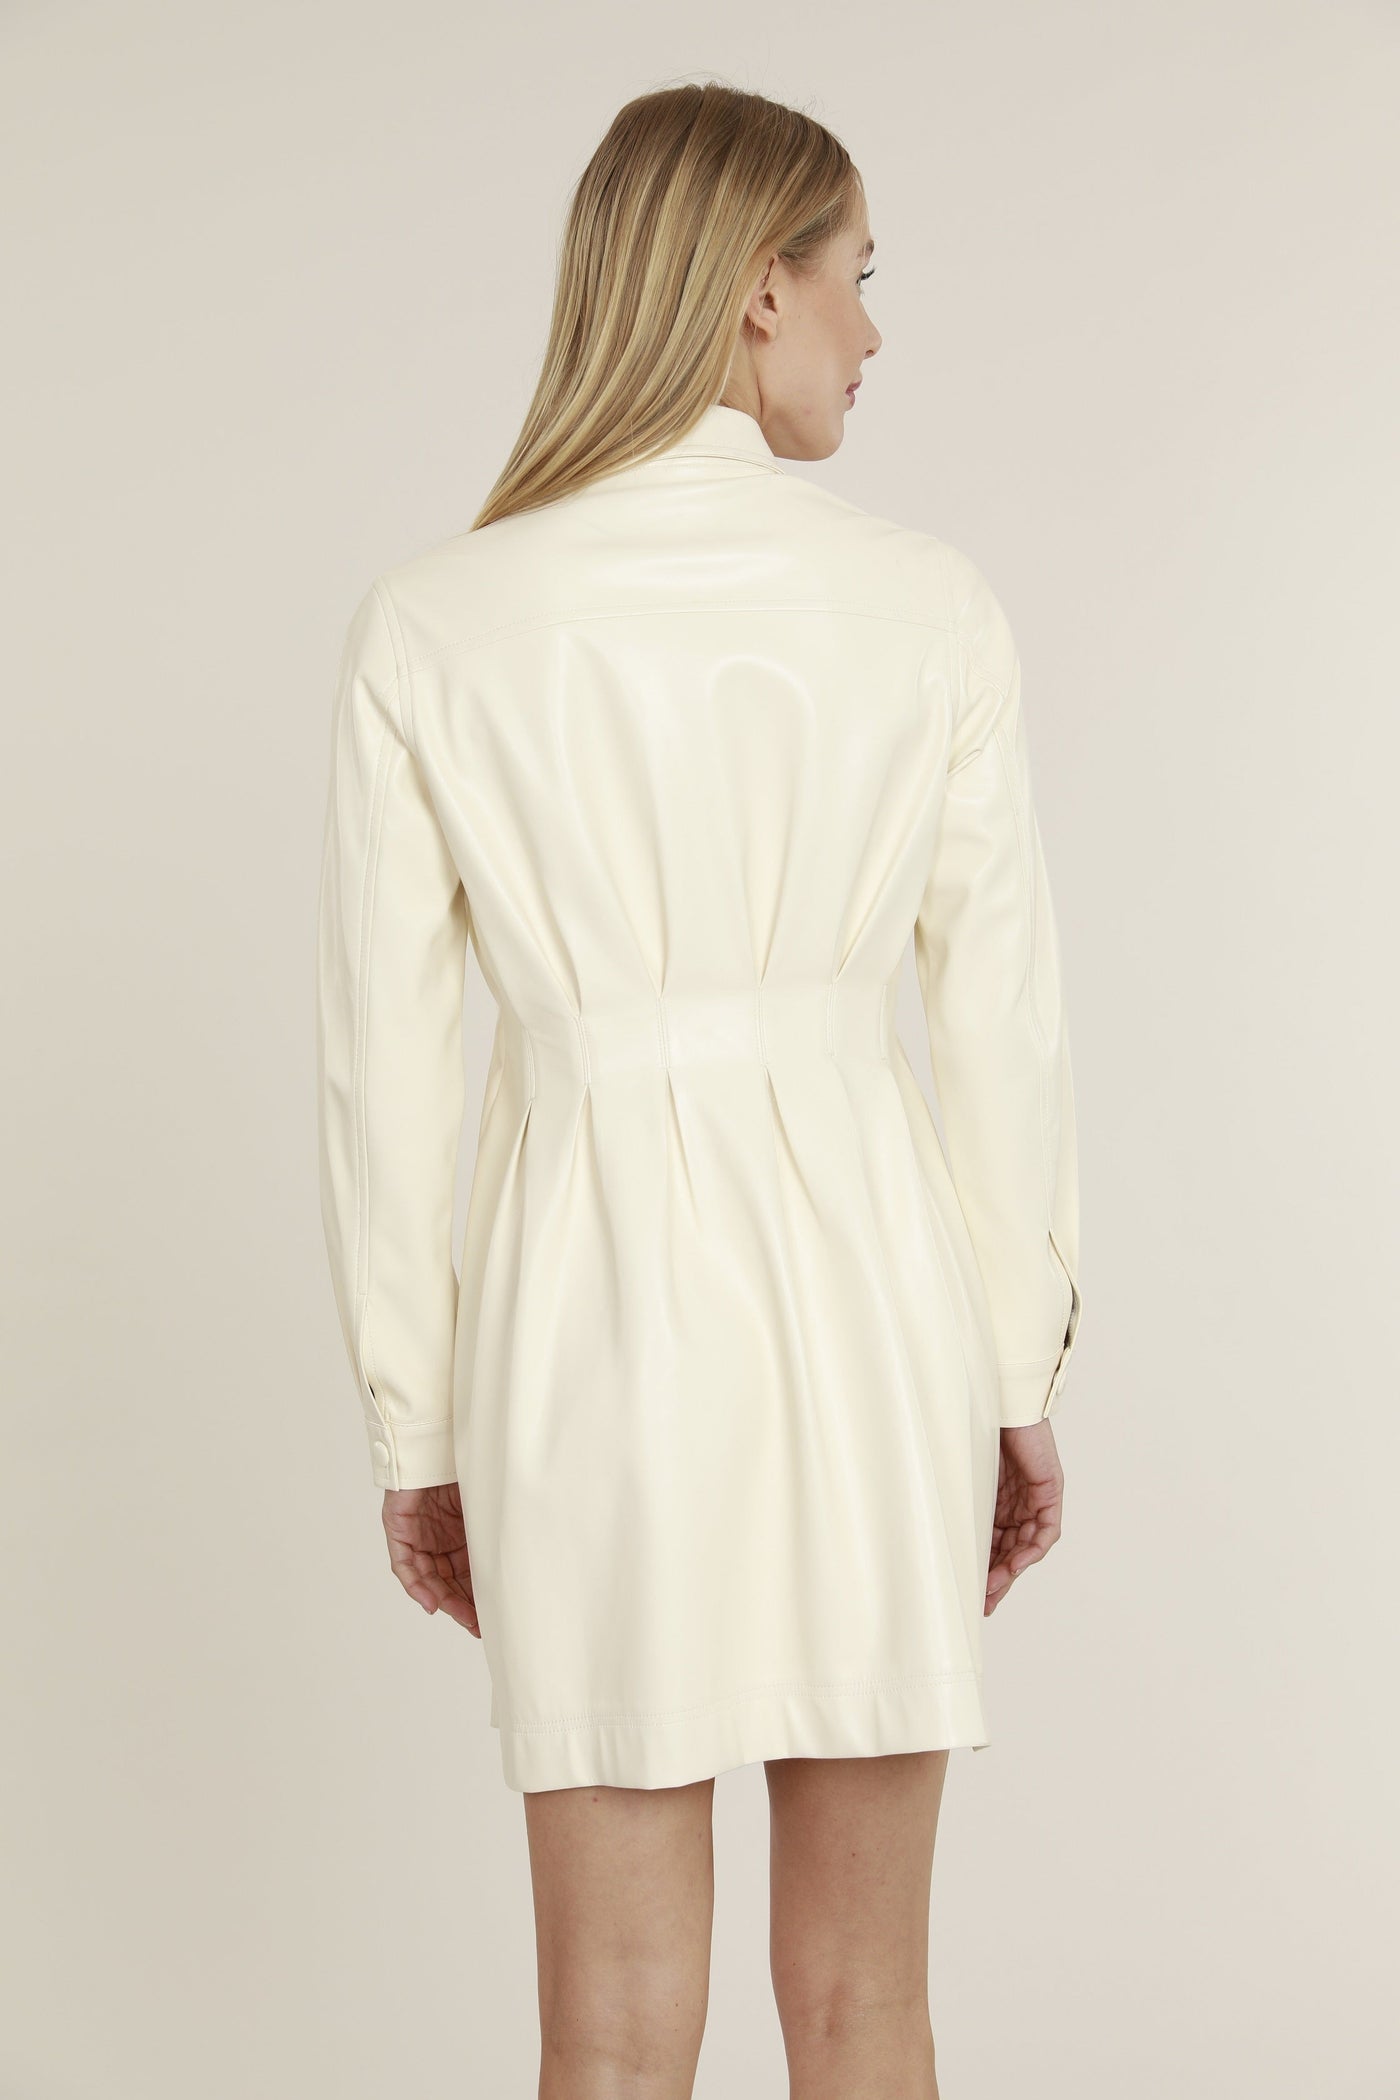 Vegan Leather Pin Tuck Waist Dress in Ivory